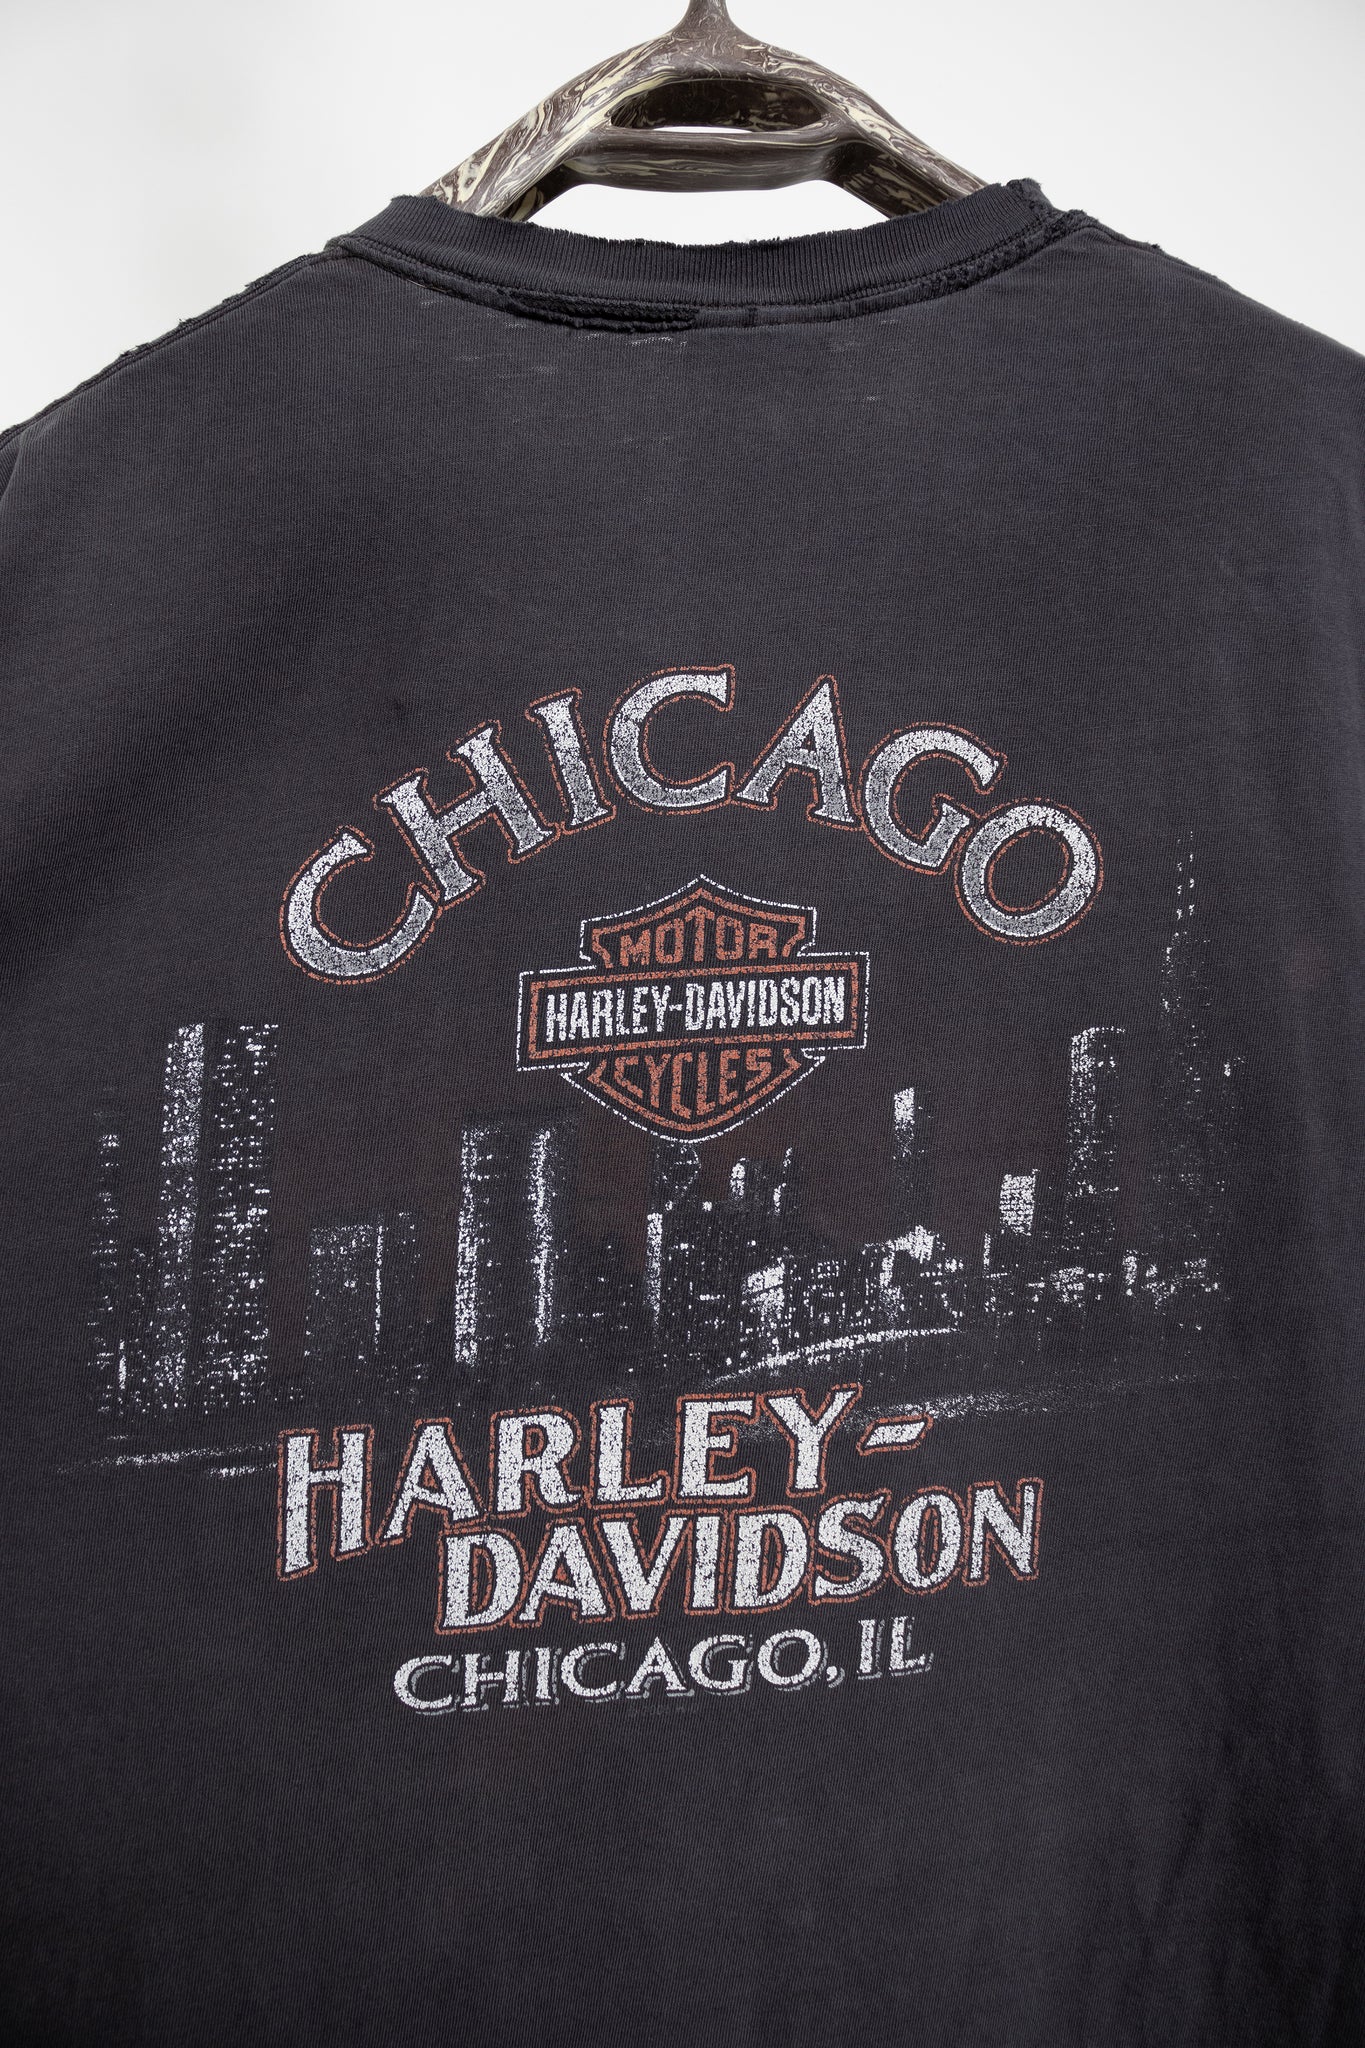 Chicago Harley Davidson